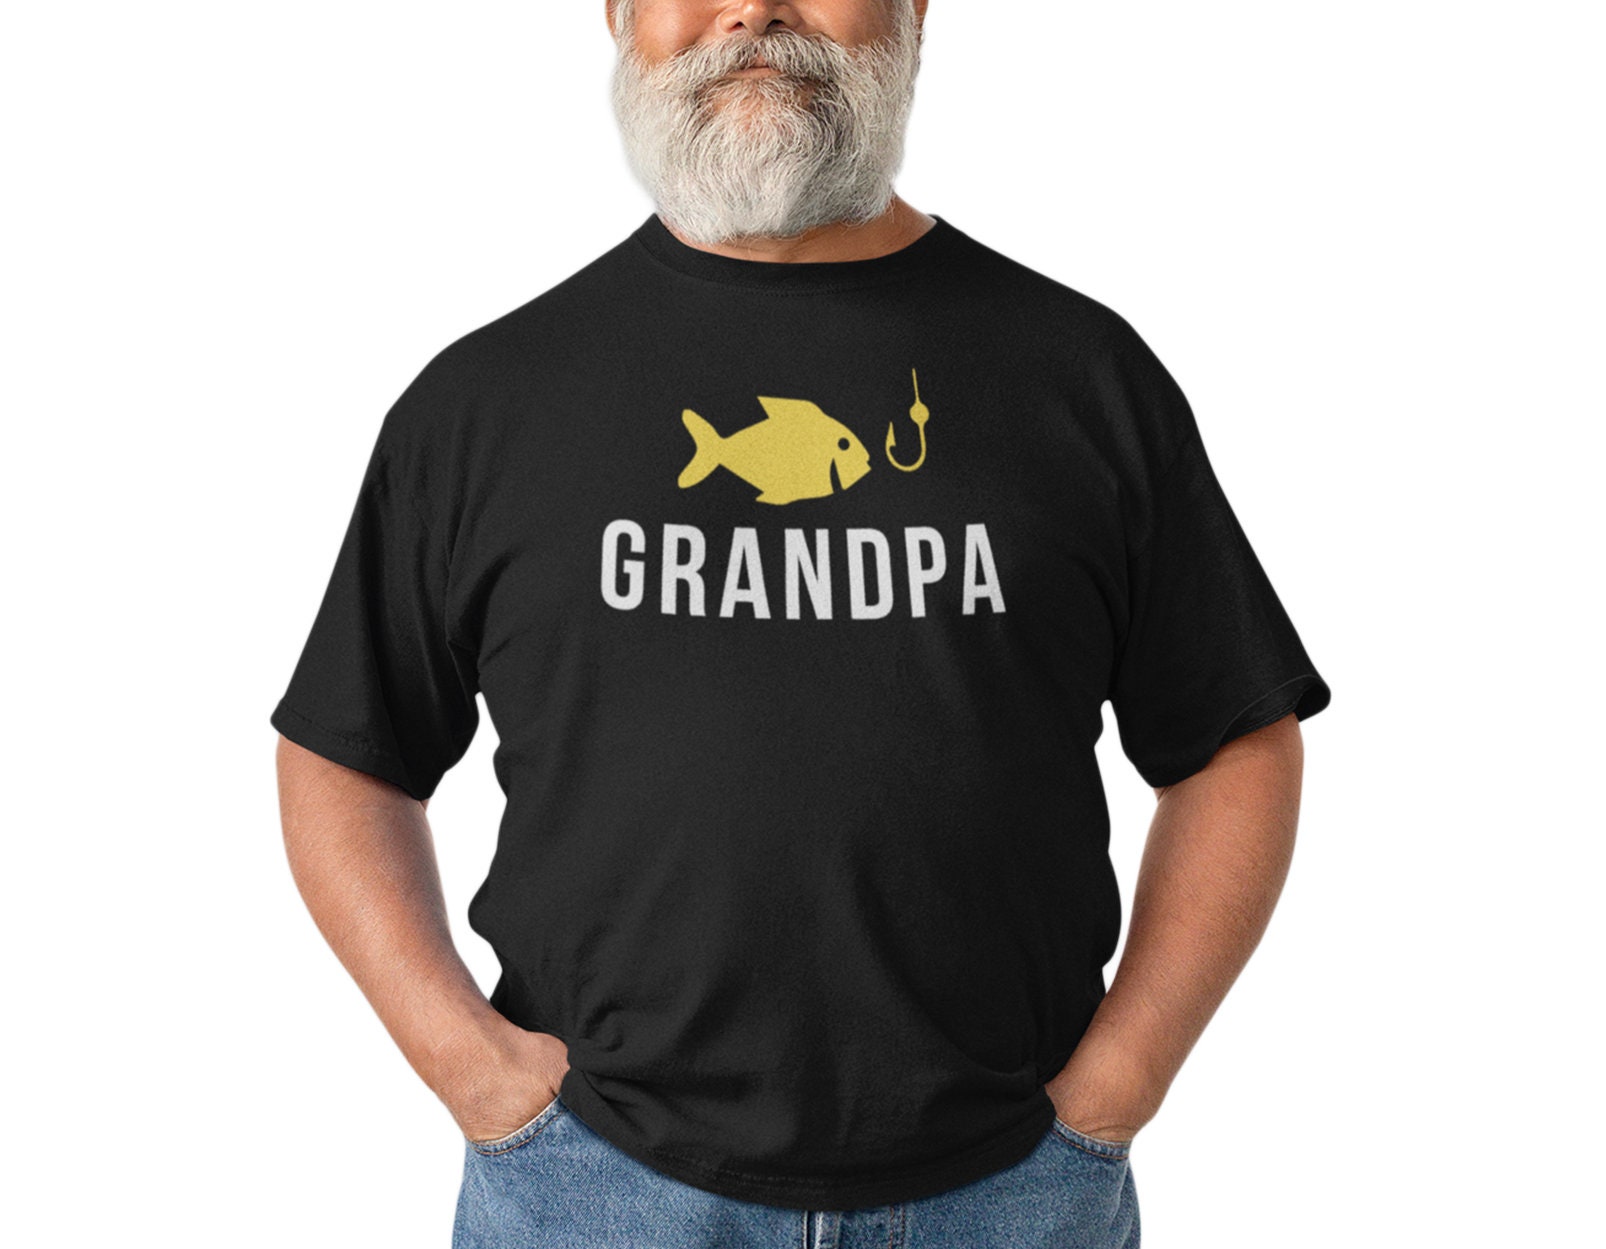 Grandpa & Grandpas Fishing Partner Matching T-shirt Set for